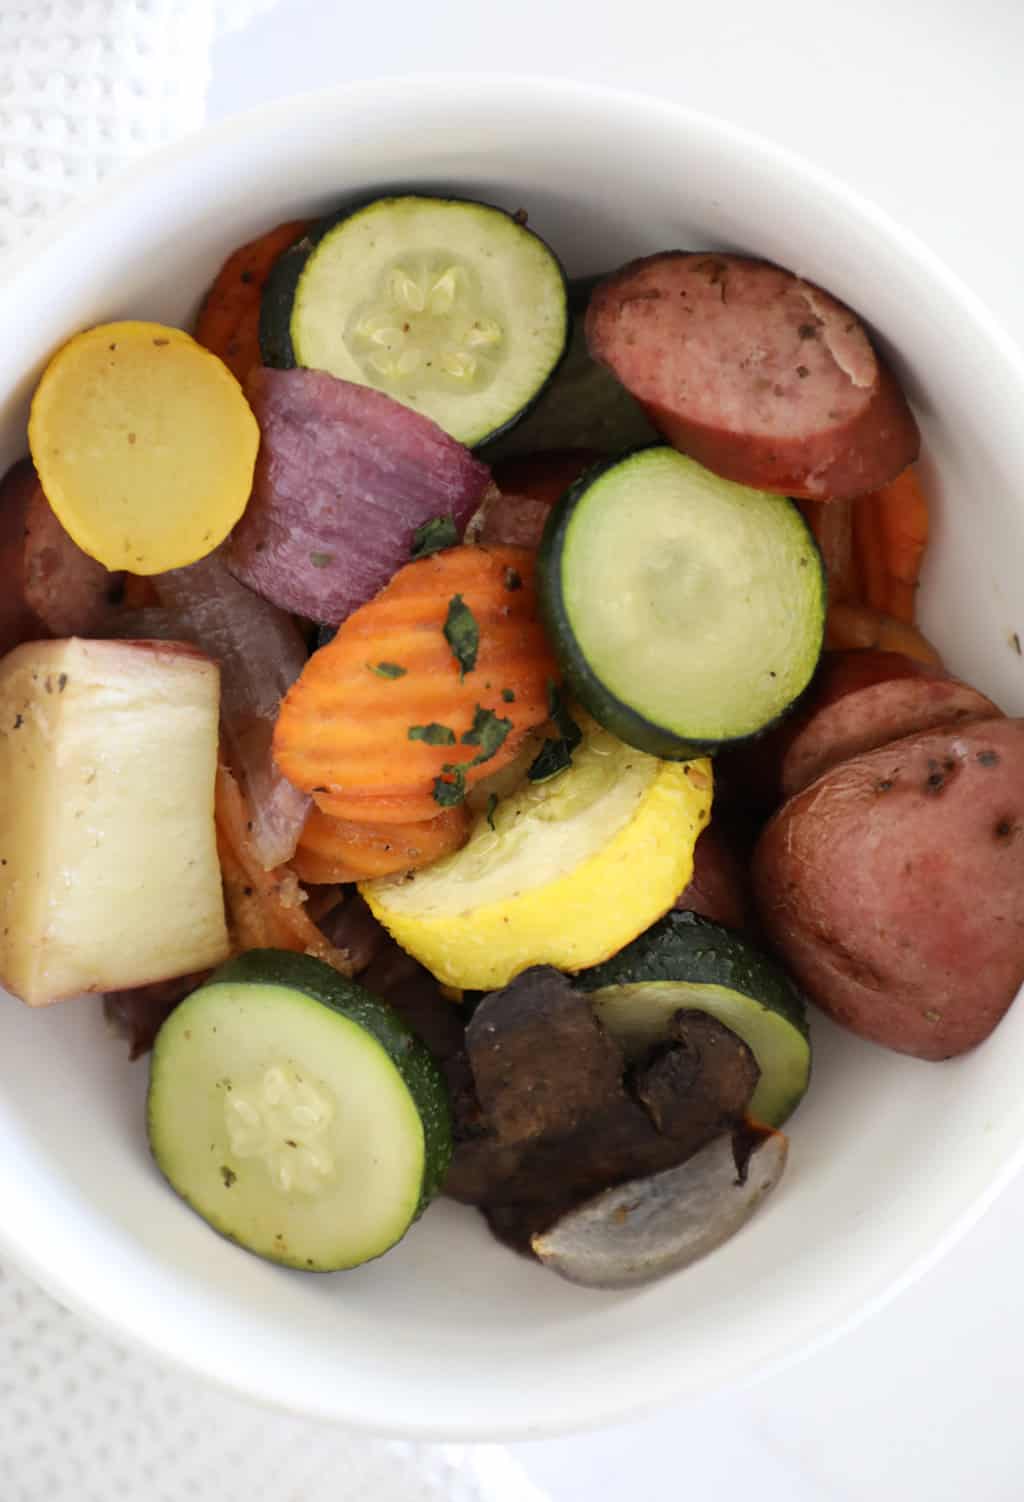 Roasted kielbasa and veggies in a white bowl on a white countertop.